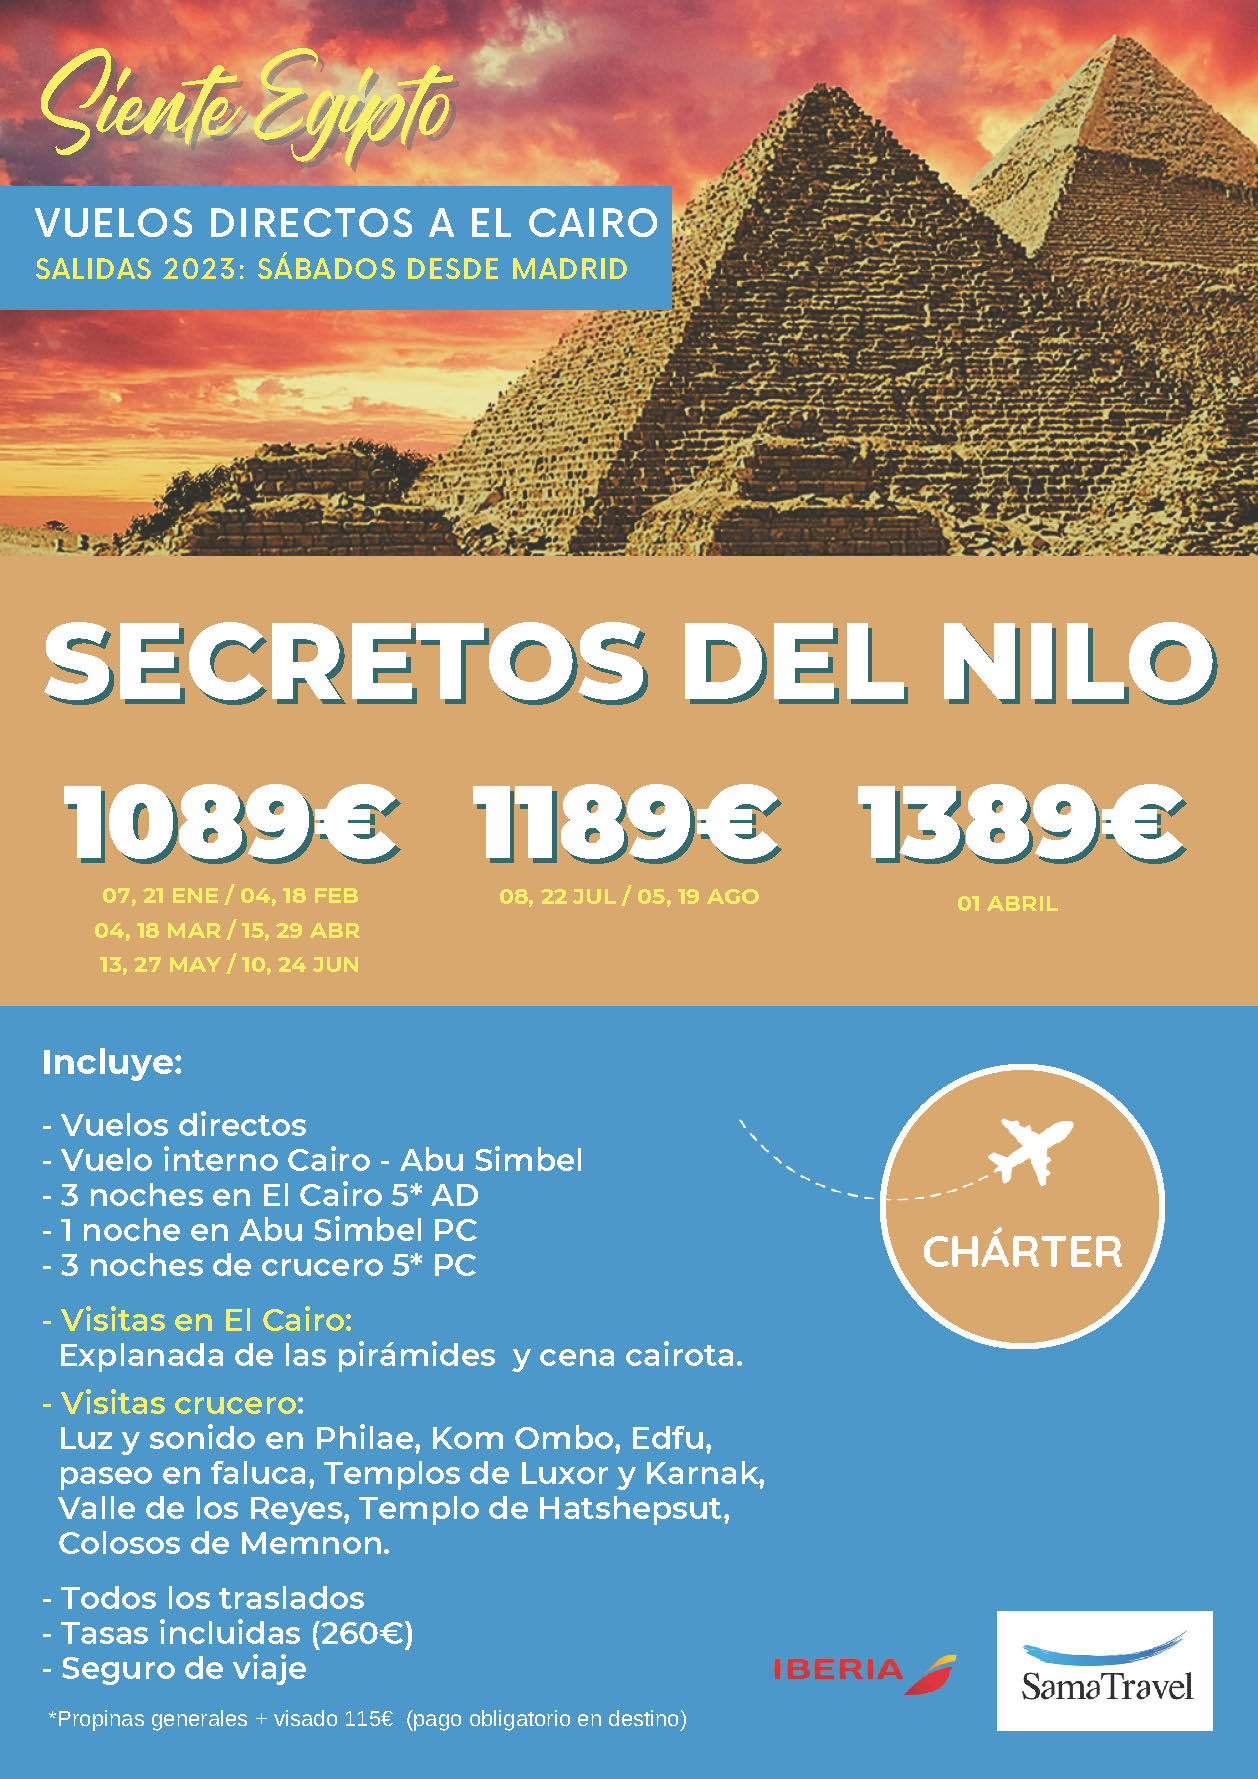 Oferta Sama Travel Egipto 2023 Secretos del Nilo 8 dias salidas en vuelo charter directo desde Madrid